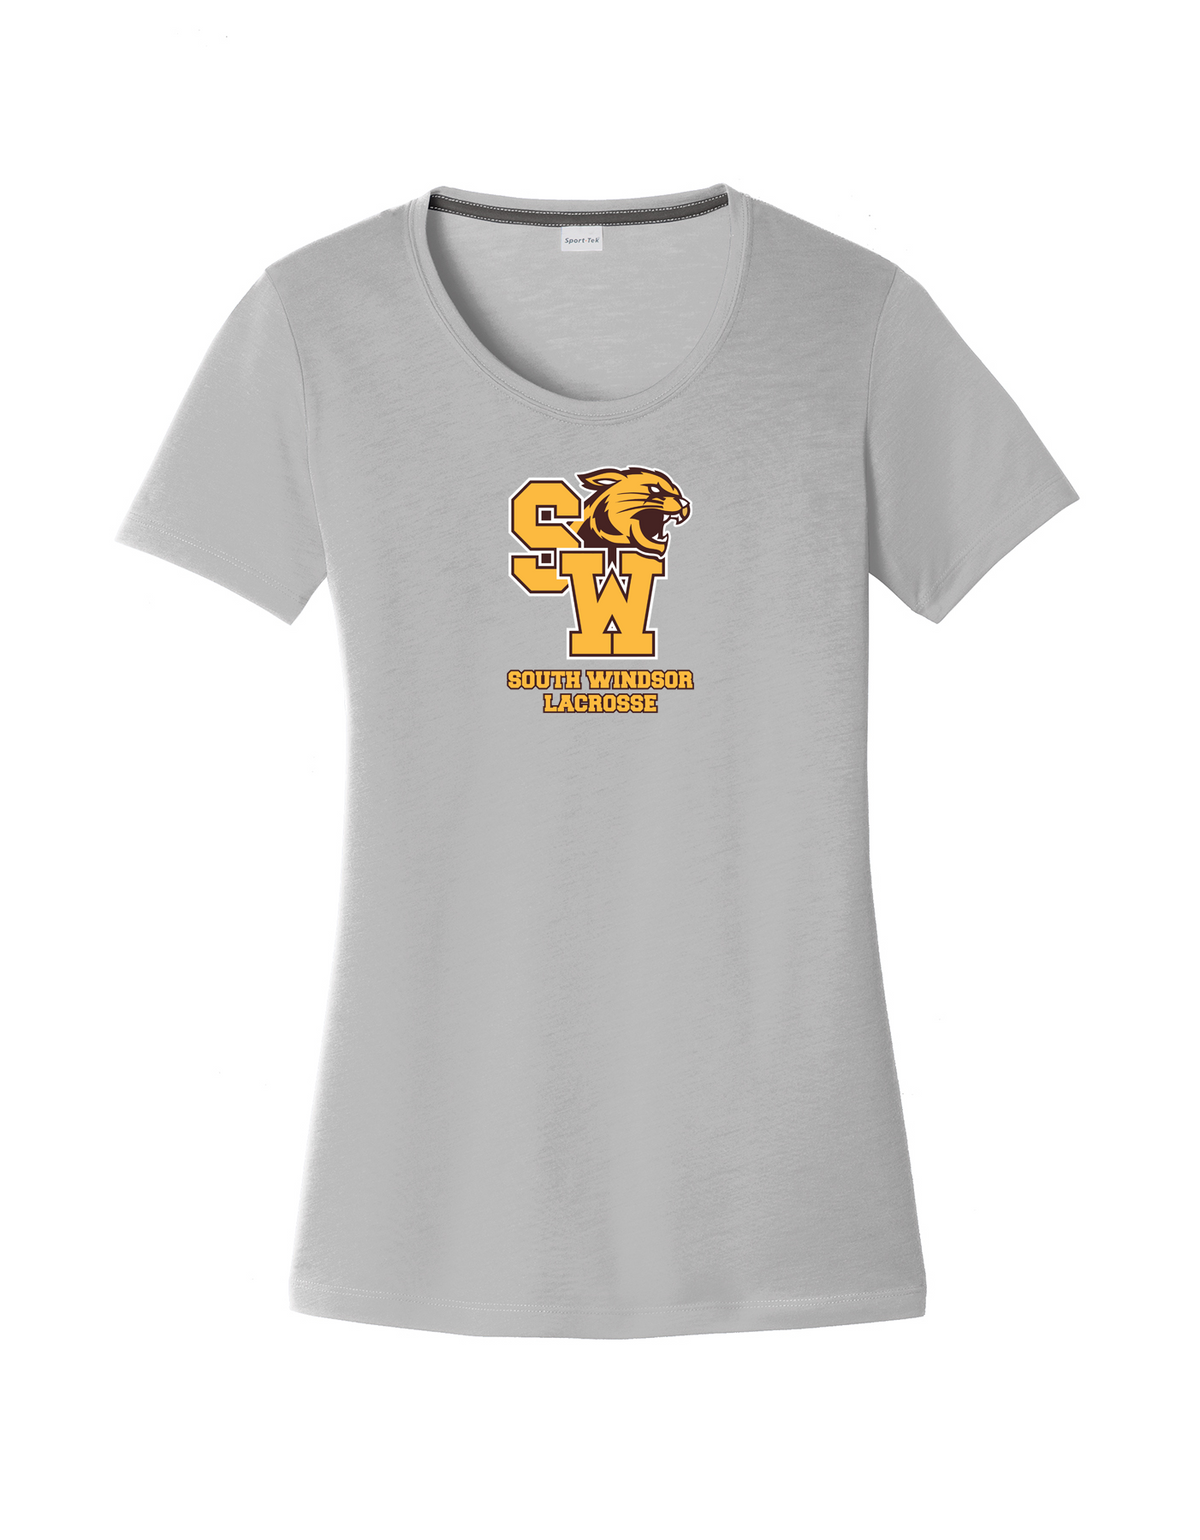 South Windsor Lacrosse Women's CottonTouch Performance T-Shirt